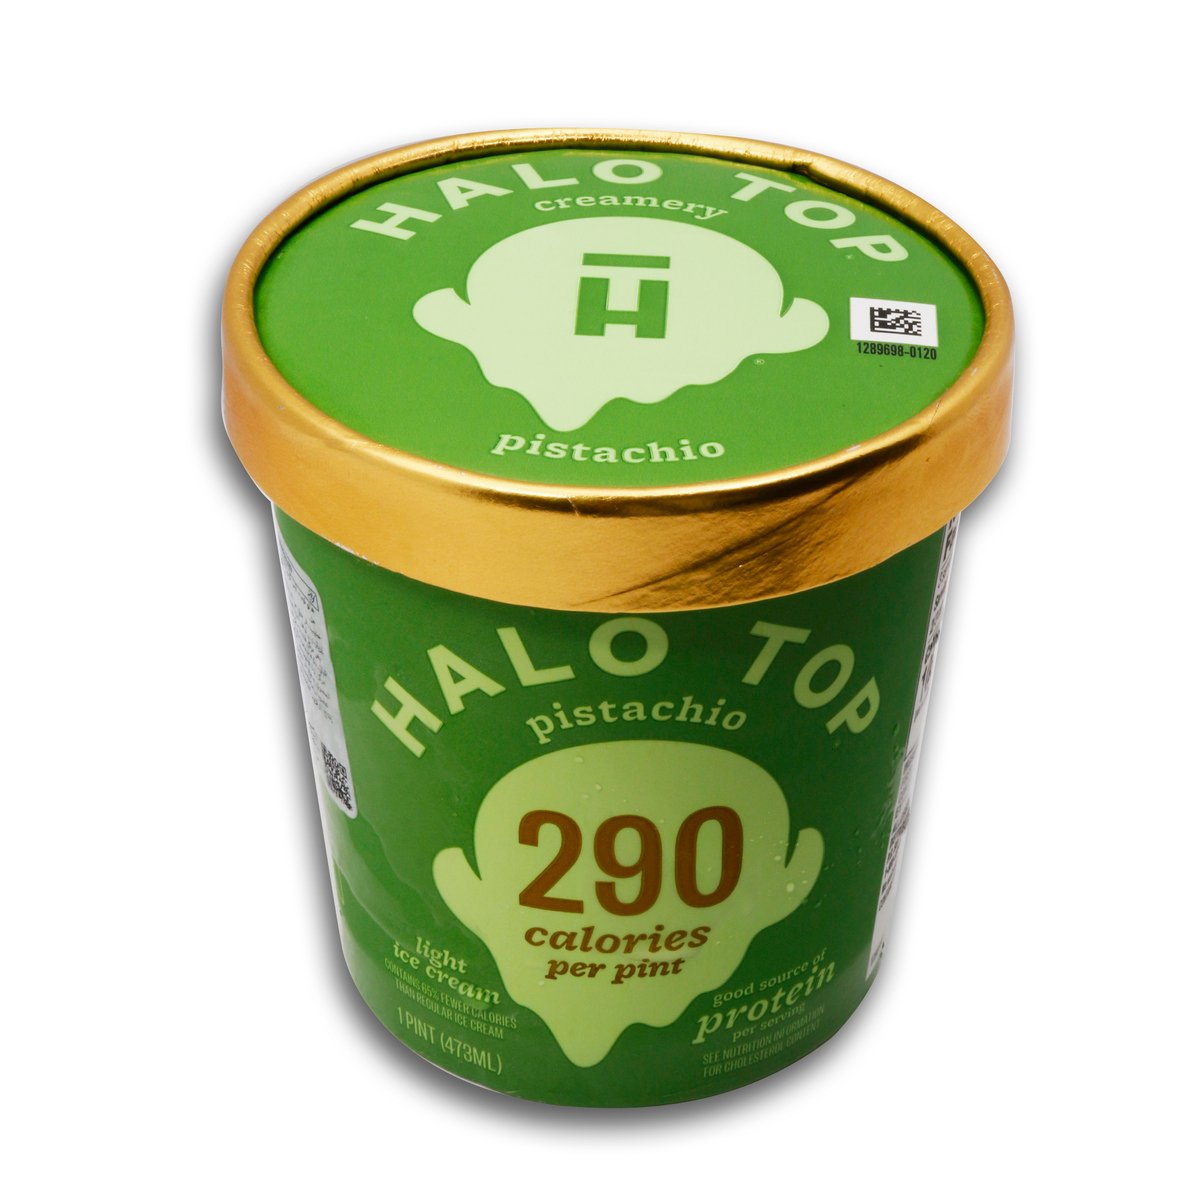 Halo Top Light Ice Cream Pistachio 473ml